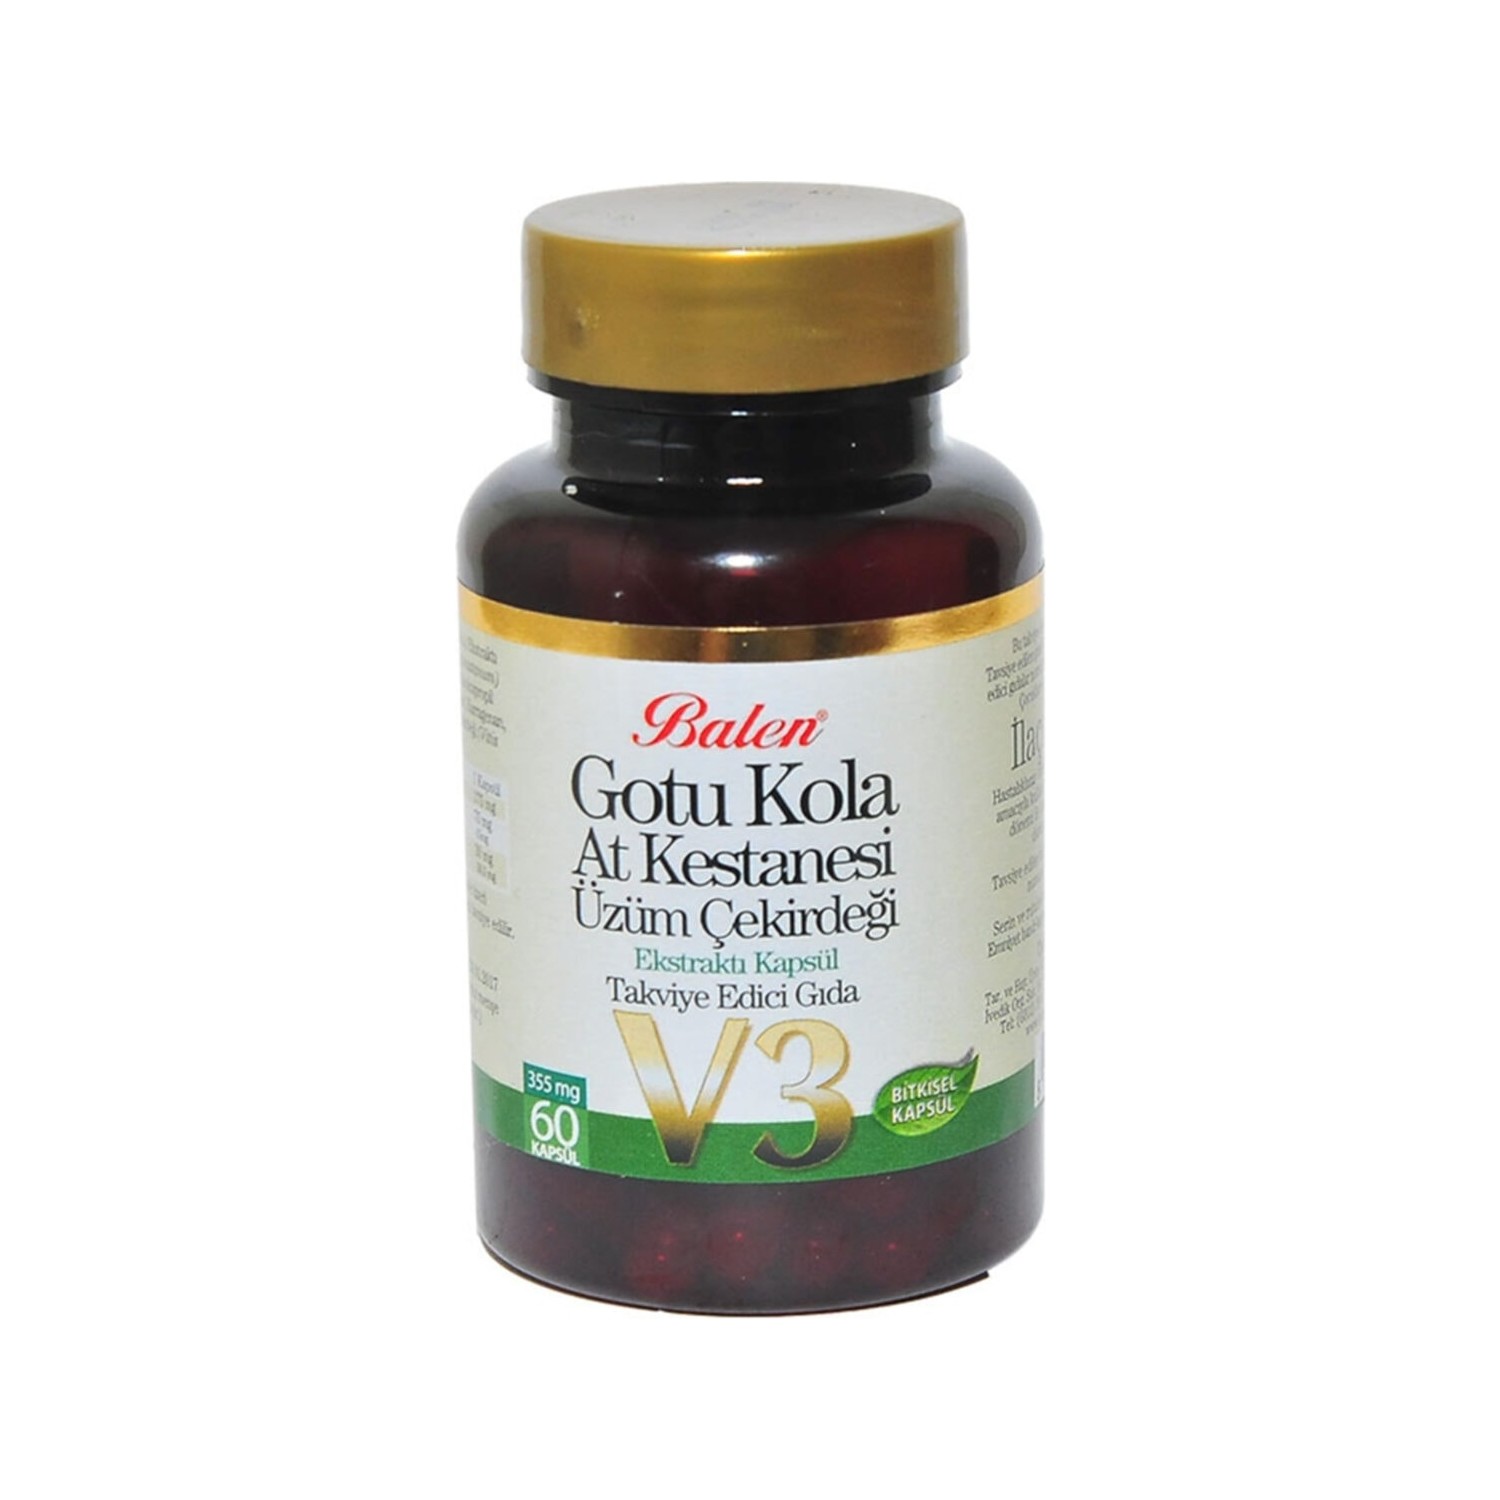 Активная добавка Balen Gotu Kola Horse Chestnut Grape Seed Extract V3, 60 капсул, 355 мг капсулы ostrovit gotu kola vege 90 поддерживают работу мозга